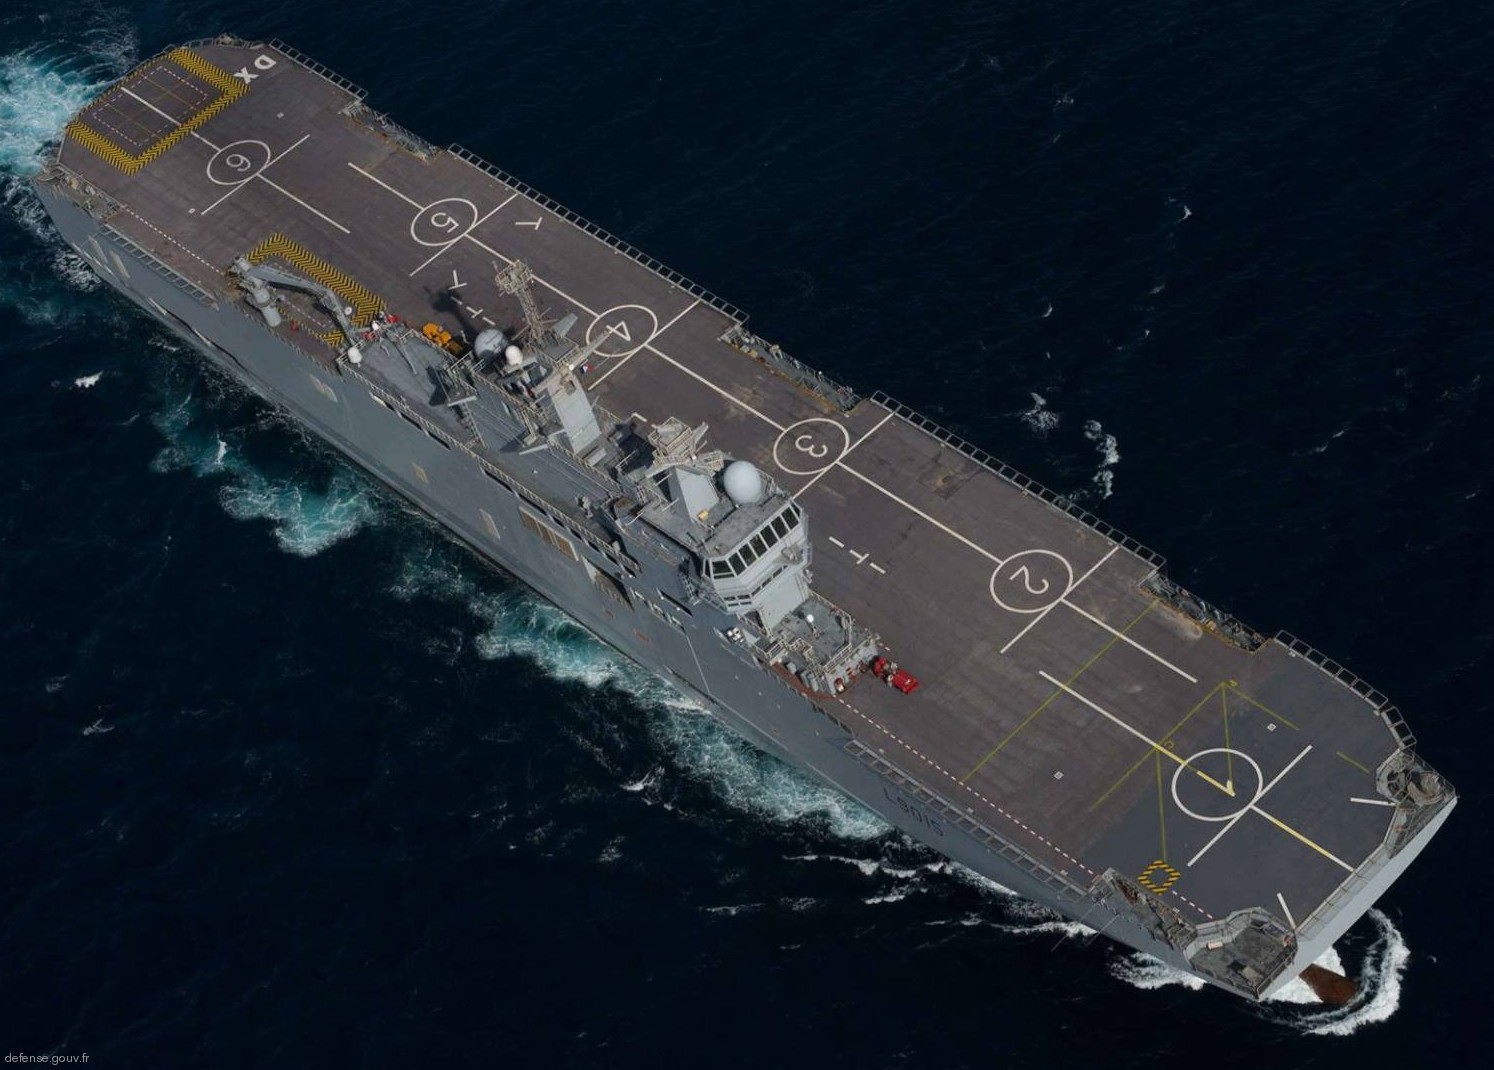 mistral class amphibious assault command ship lph bpc french navy marine nationale 03c l-9015 dixmude